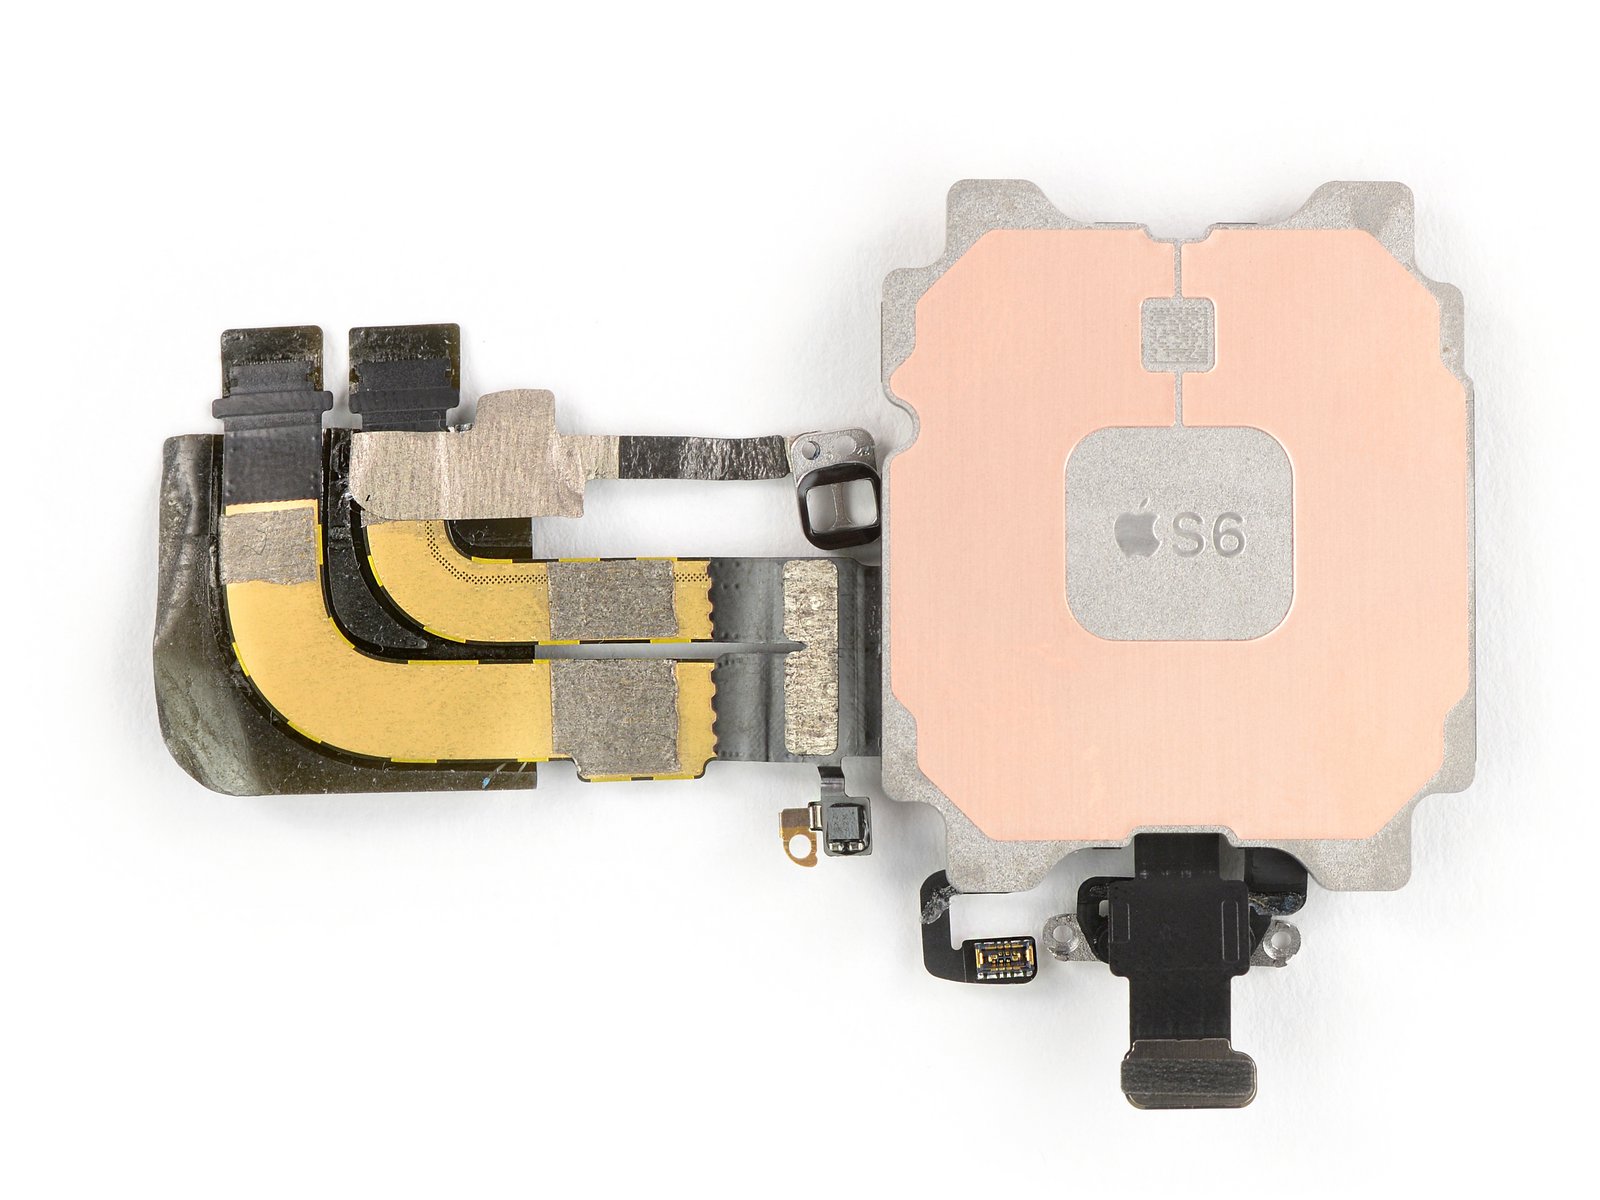 Apple Watch SE vs 7 processor